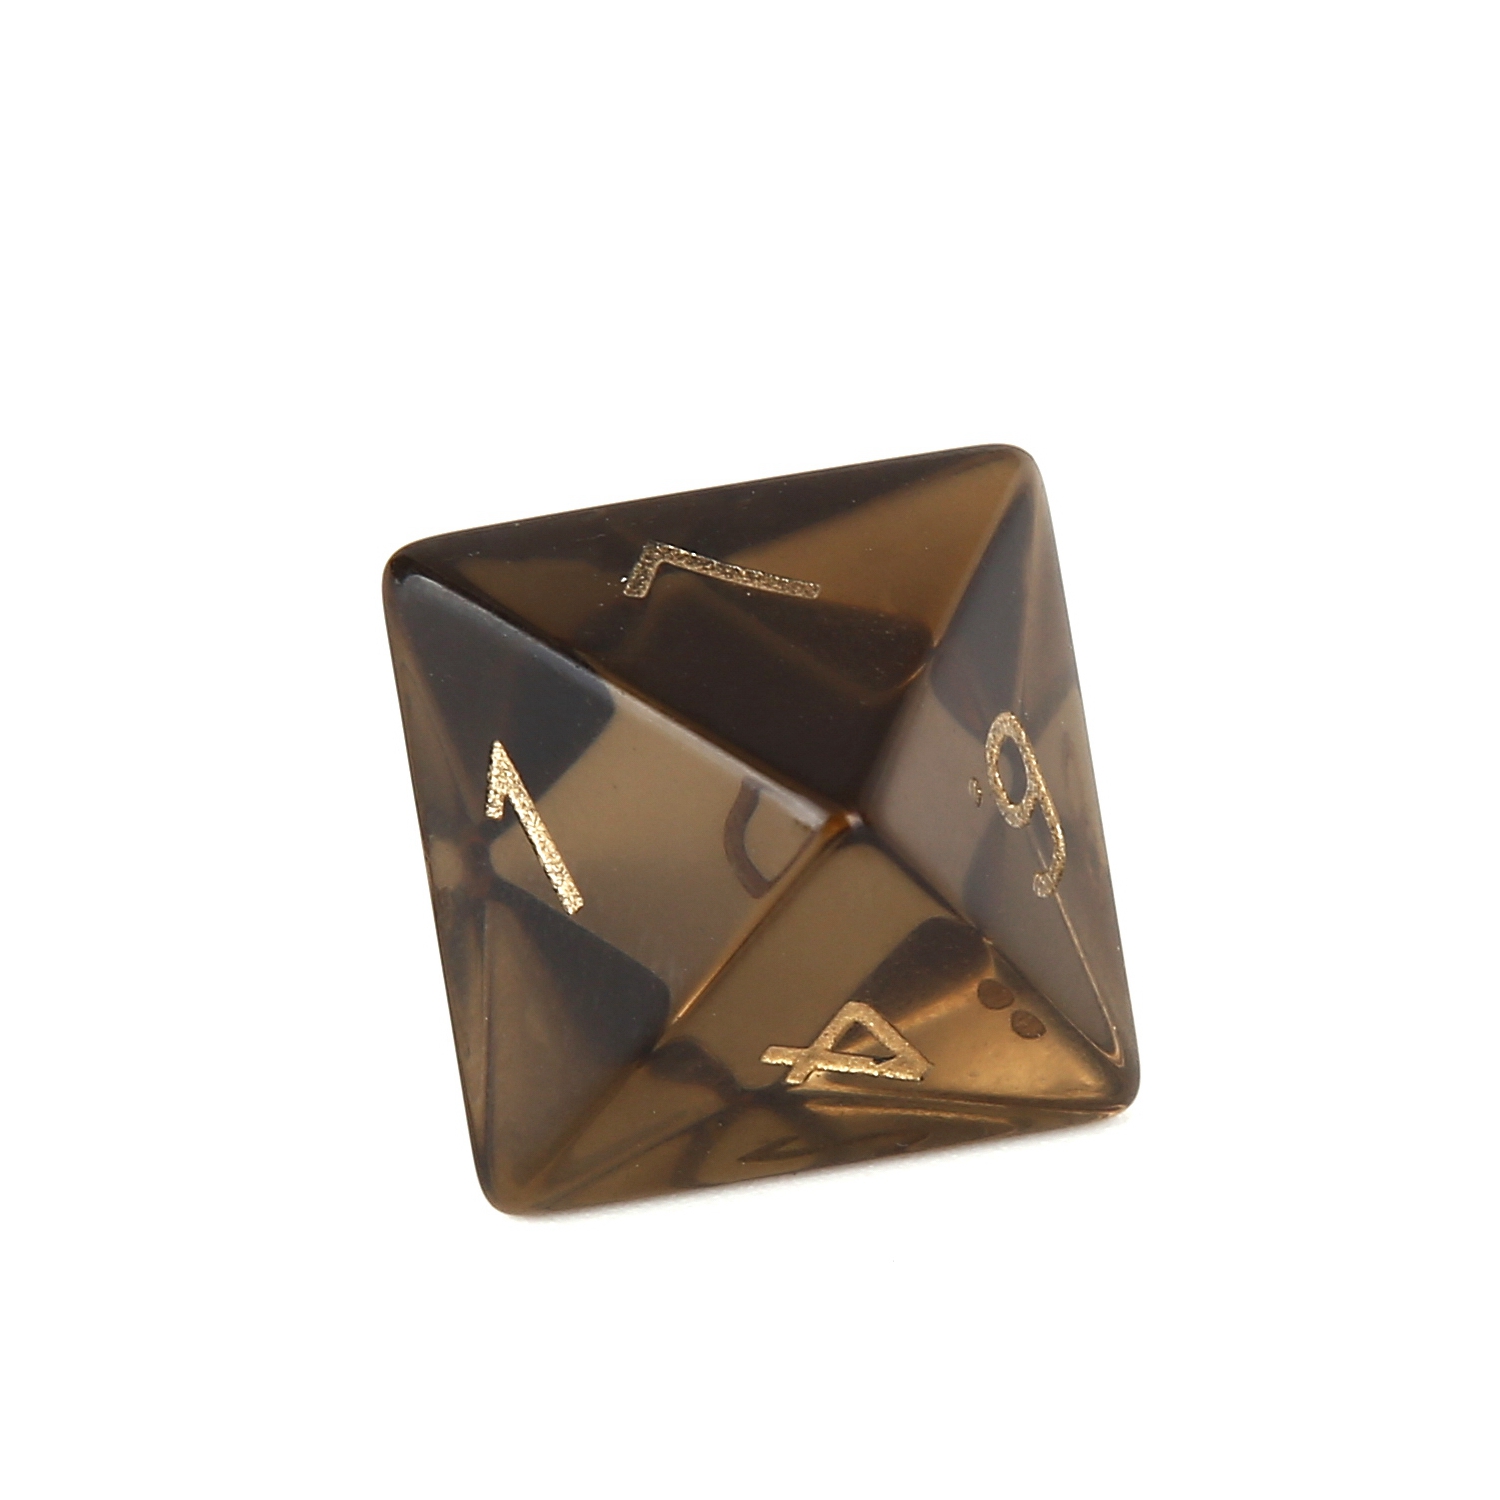 D8 icosahedron